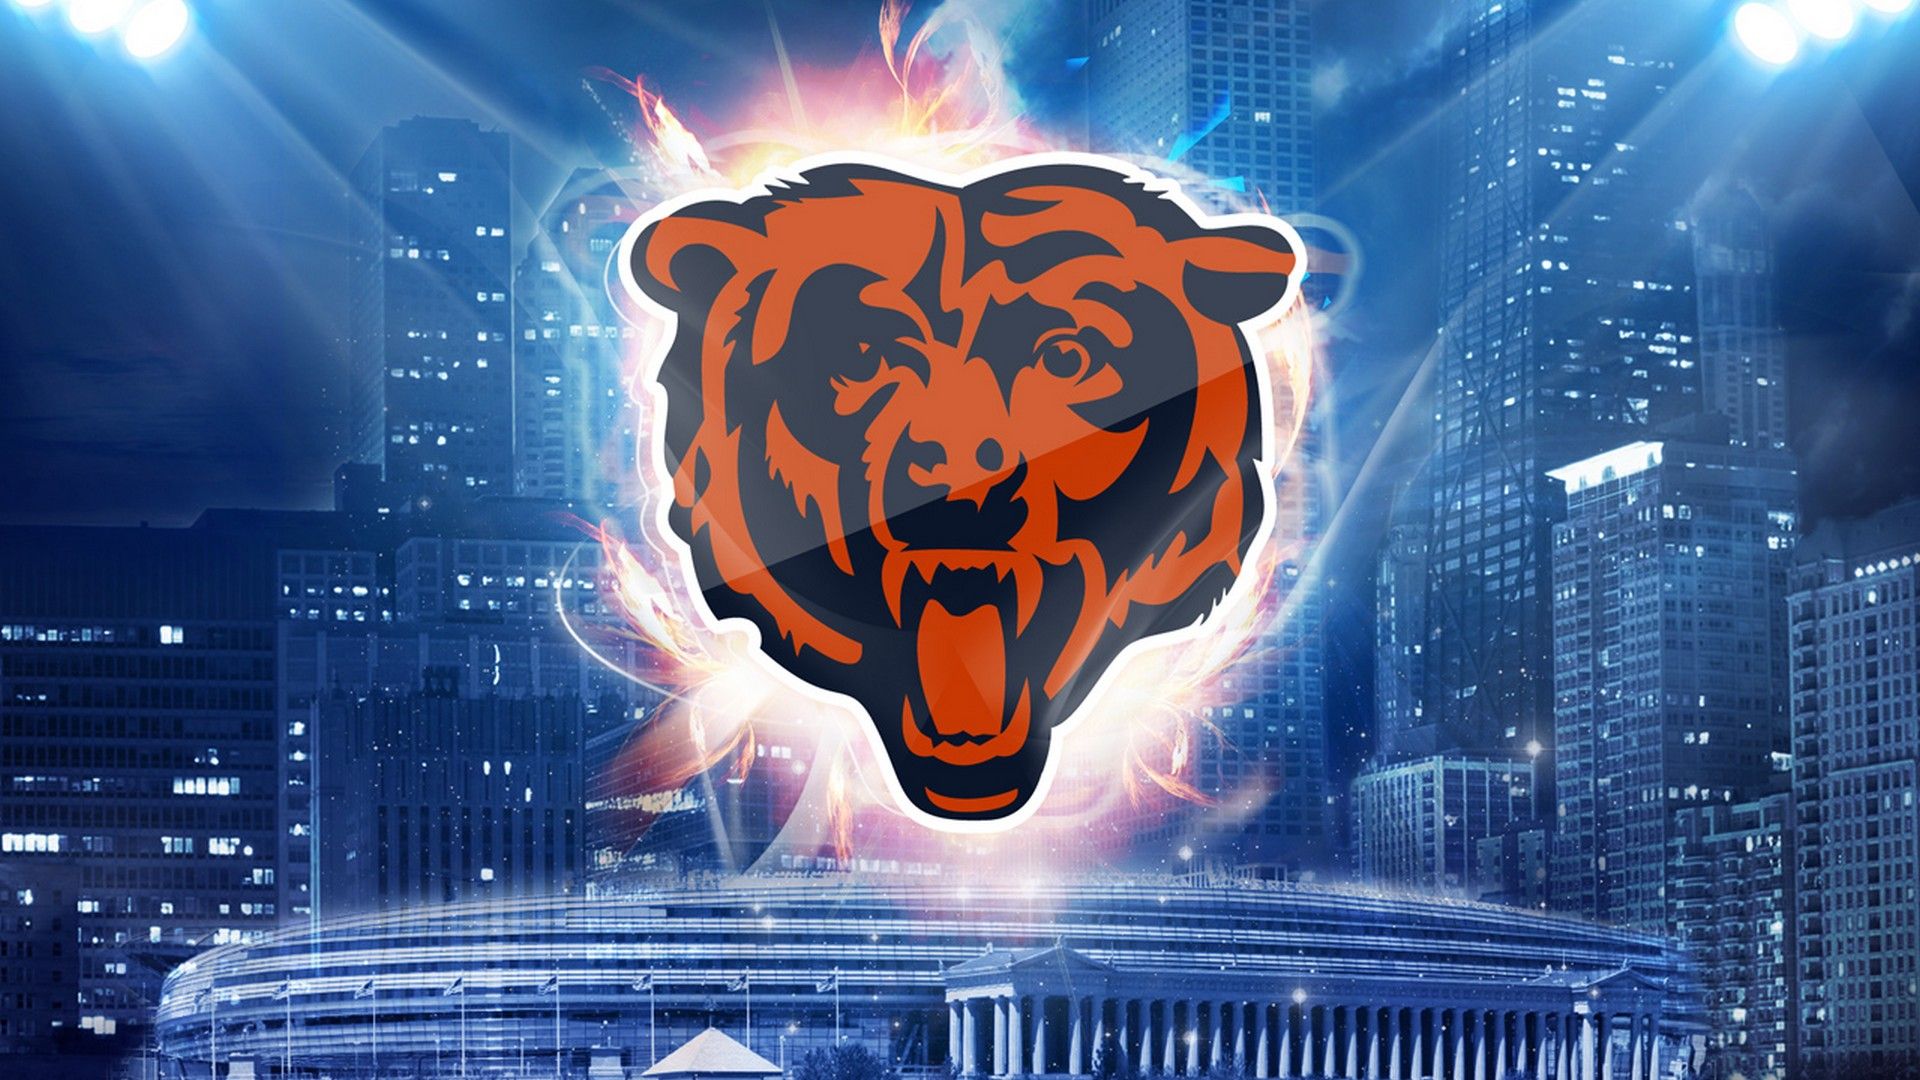 Wallpaper HD Bears NFL Football Wallpaper. Chicago bears wallpaper, Chicago bears logo, Chicago bears football